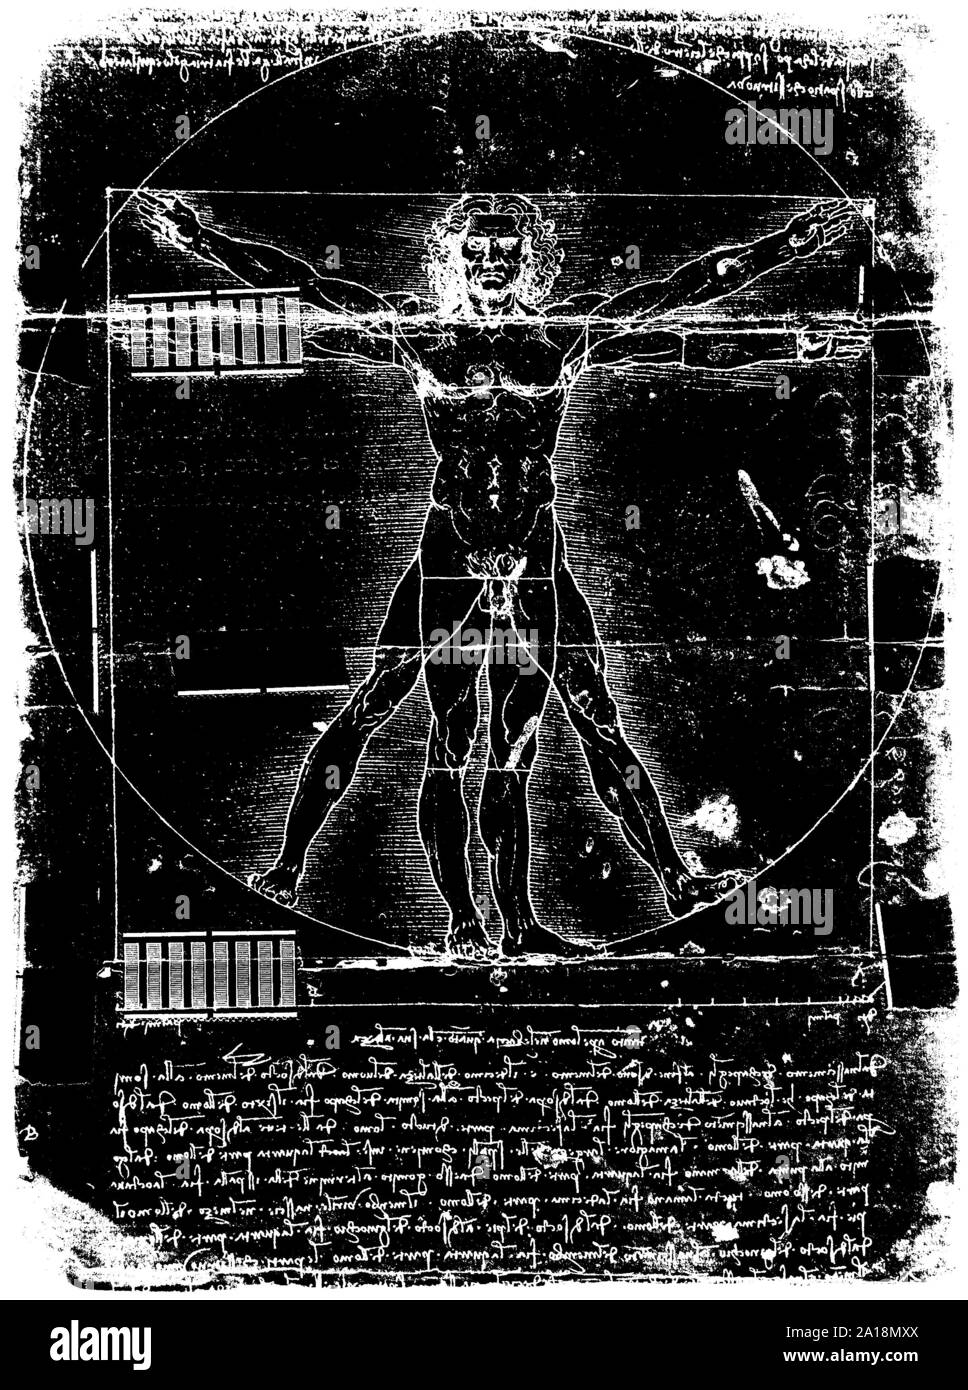 Photo of the Vitruvian Man by Leonardo Da Vinci from 1492 on textured background. Stock Photo